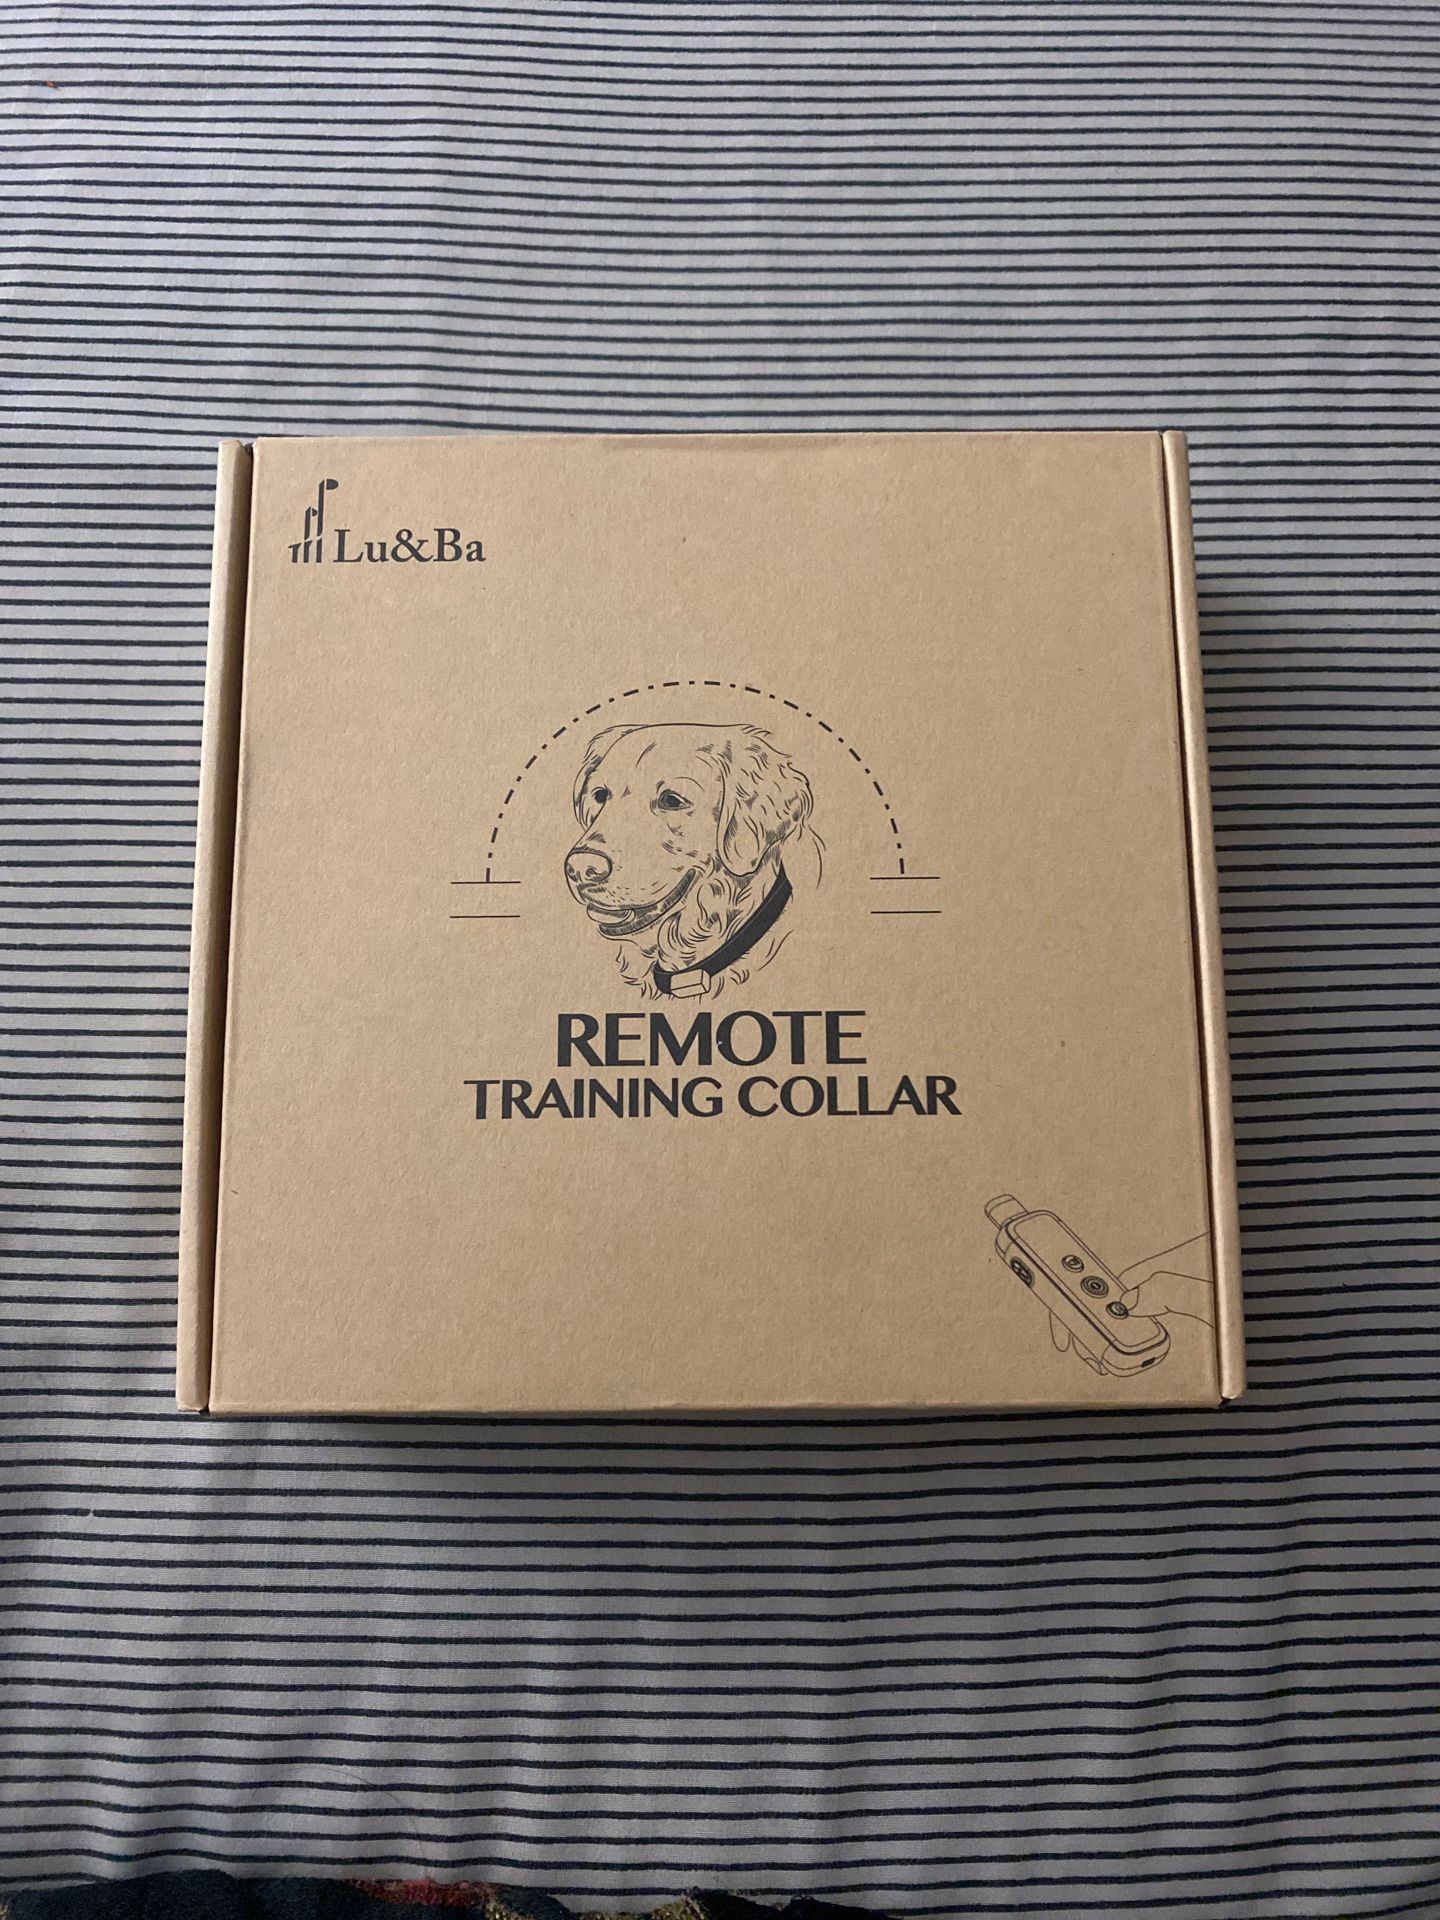 Remote training collar